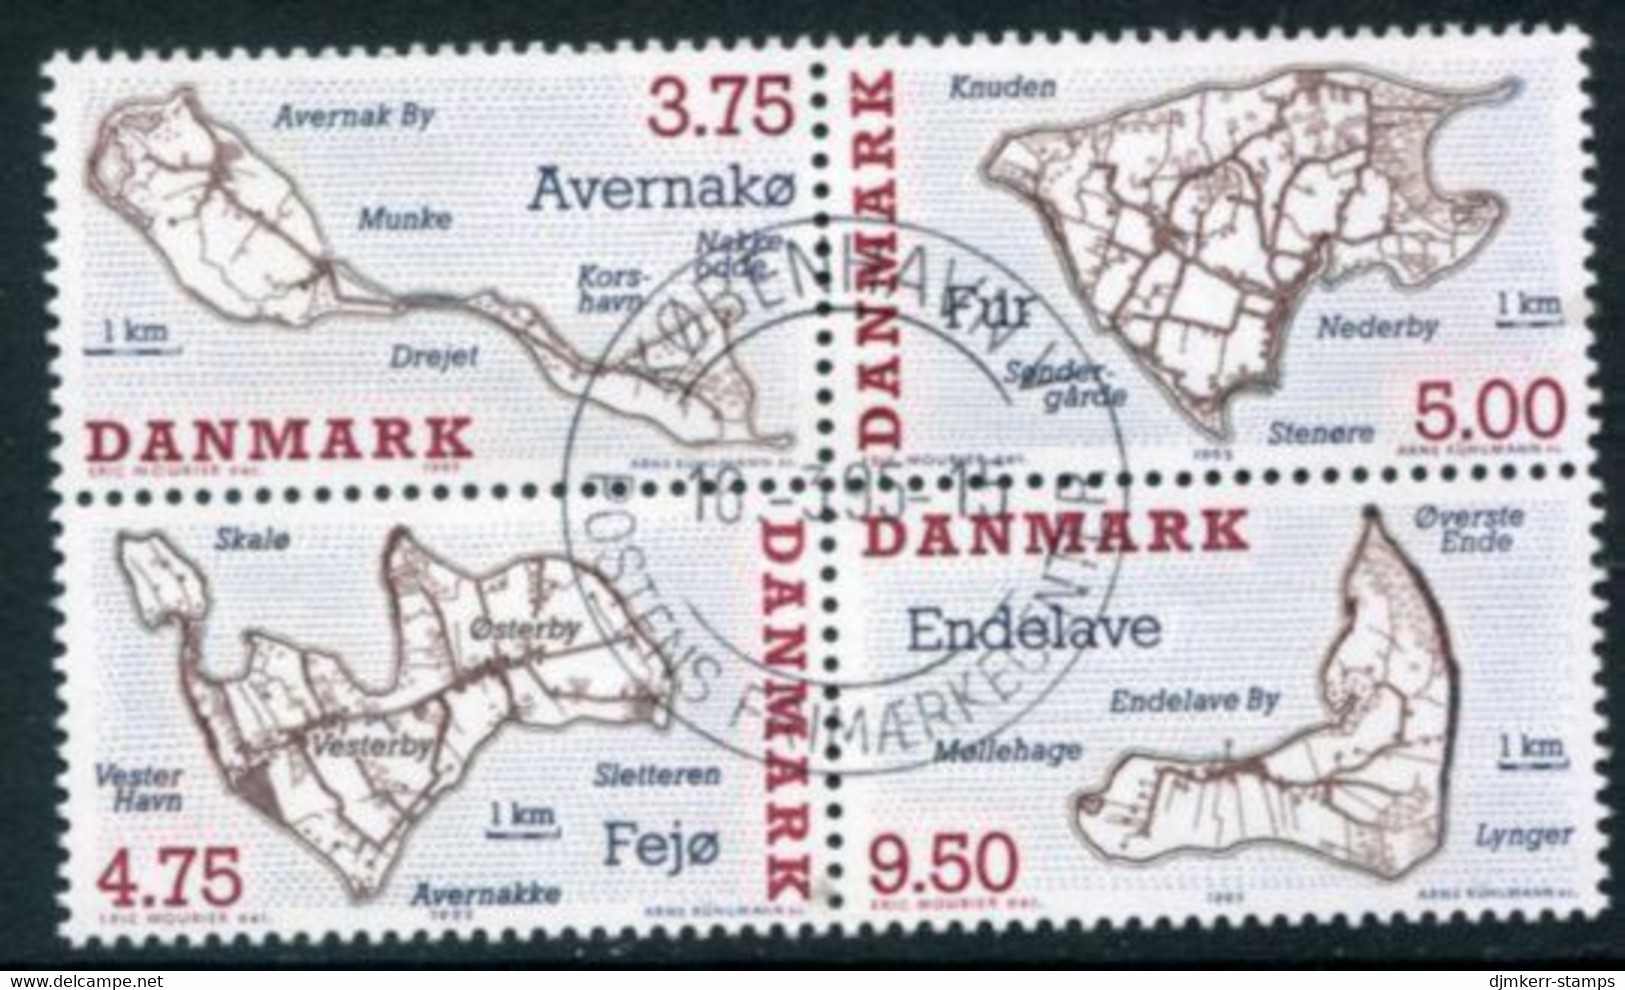 DENMARK 1995 Danish Islands Se-tenant Ex Booklet Used.  Michel 1096-99 - Used Stamps